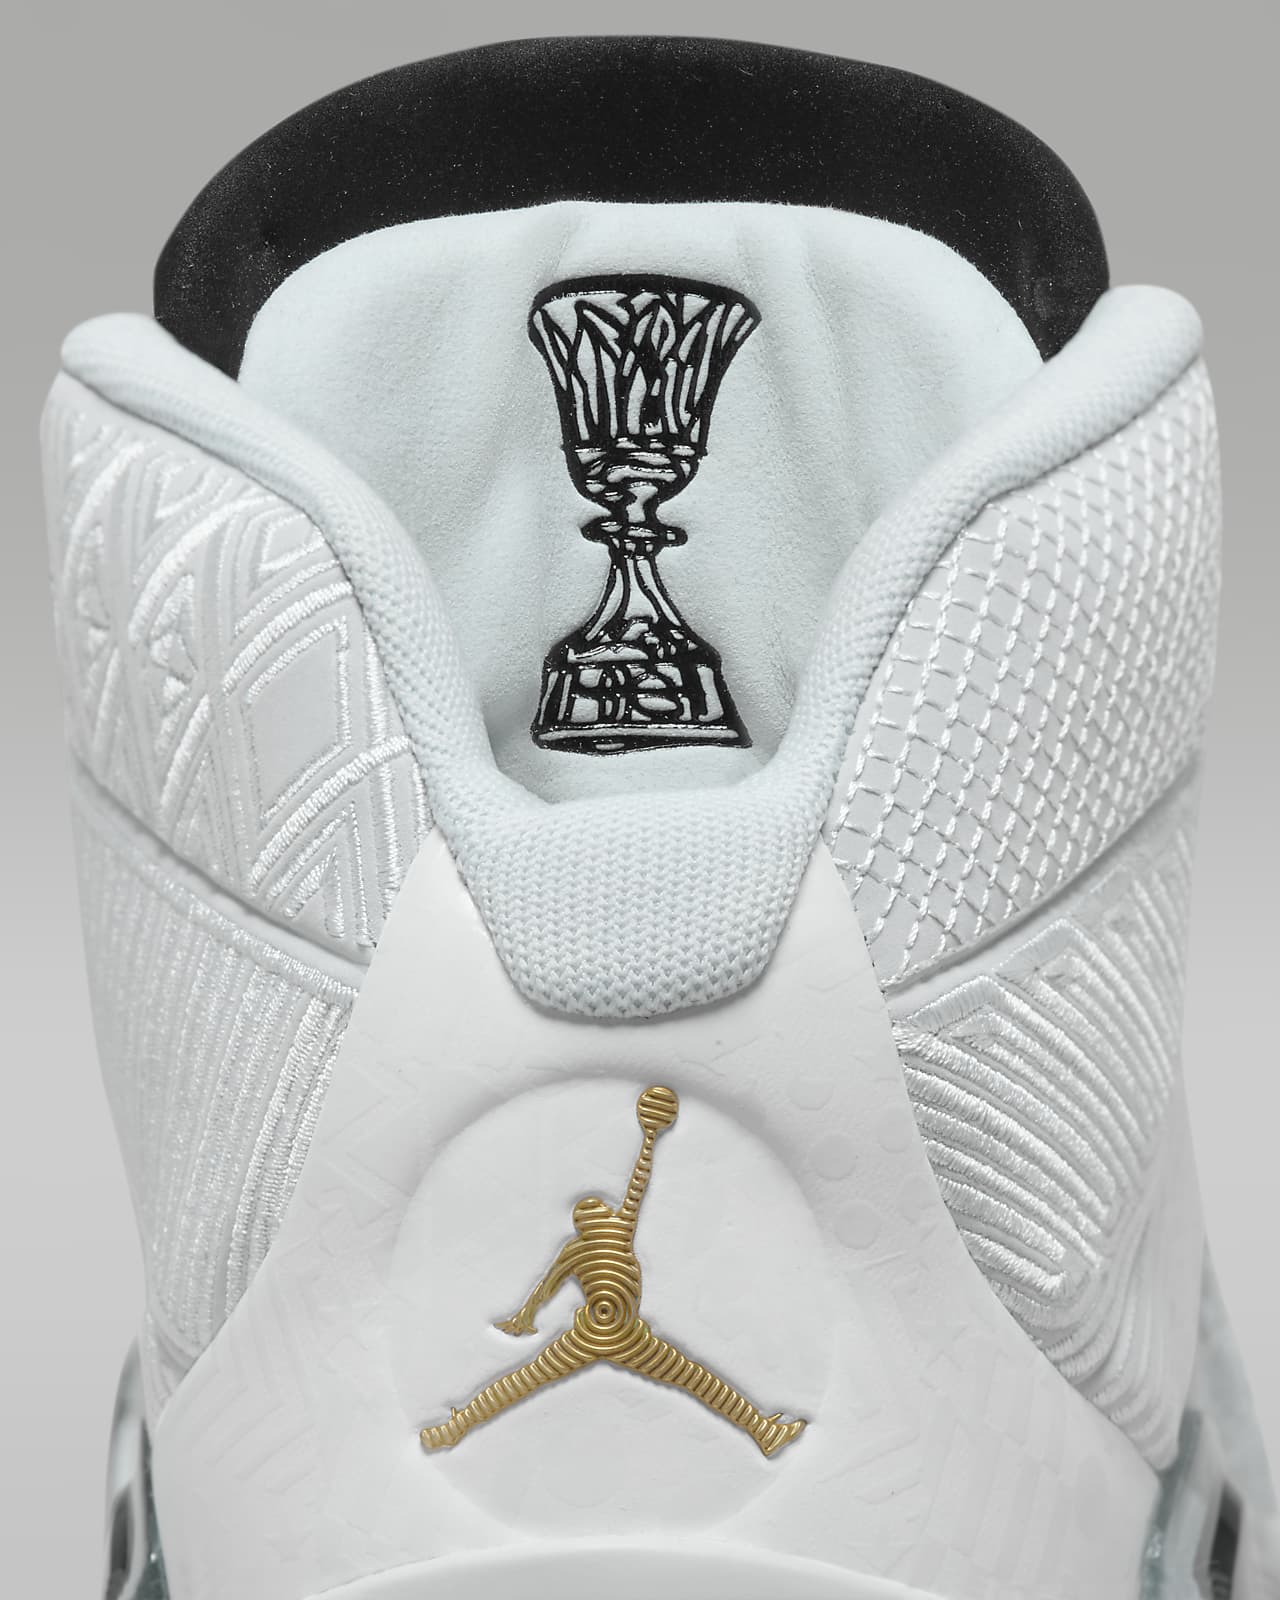 Jordan Brand launches the Air Jordan XXXVIII. Nike CA